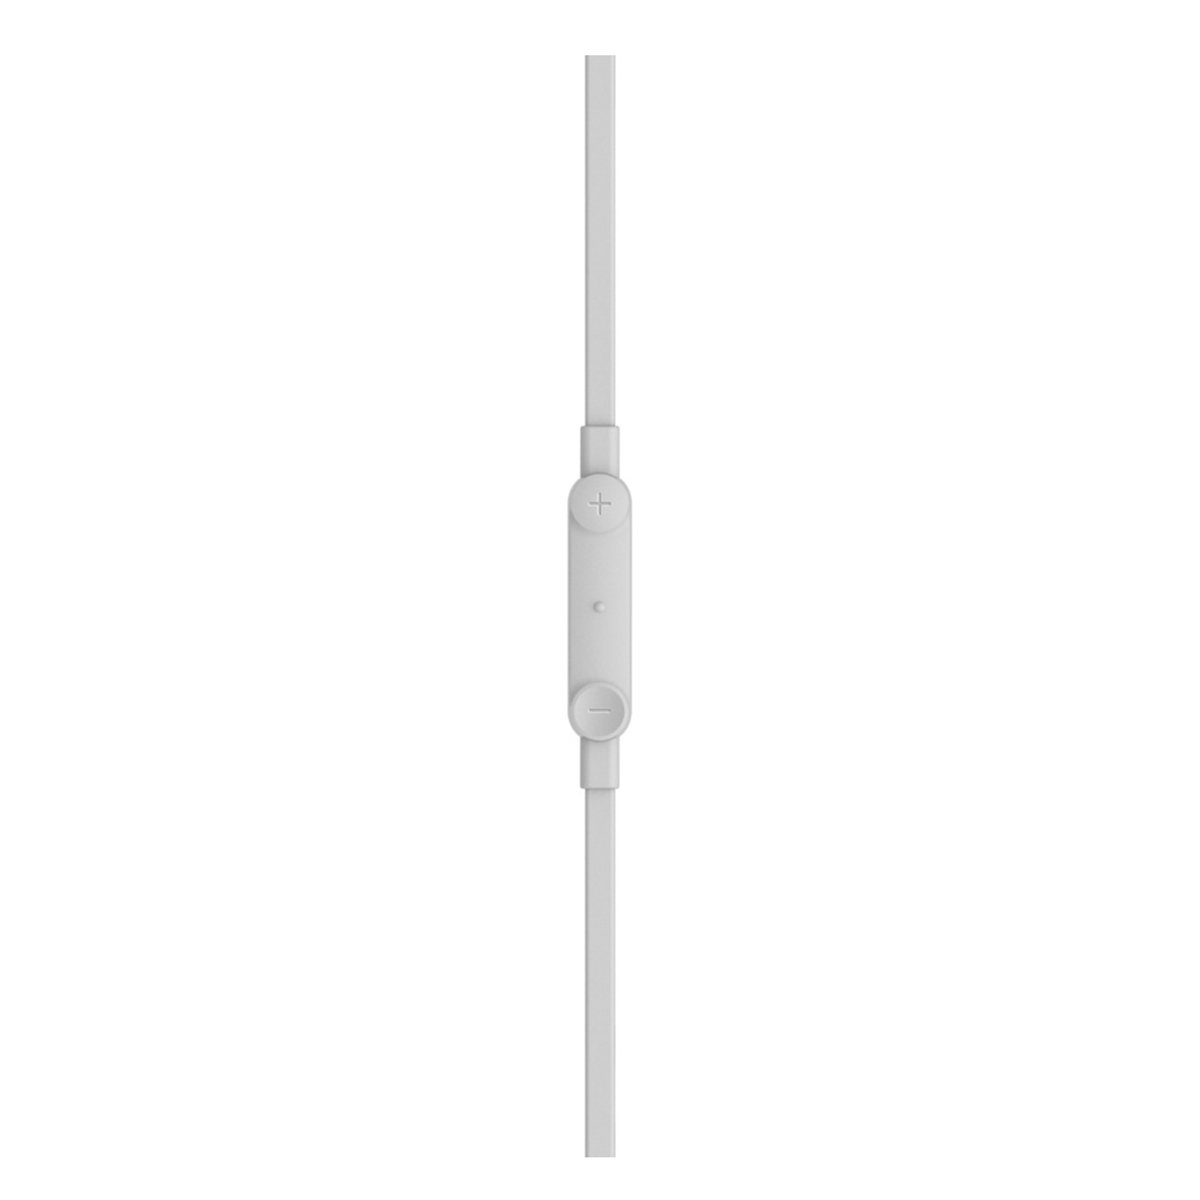 Belkin Rockstar MFI Lightning In-ear Headphones with Microphone(G3H001BTWHT) White